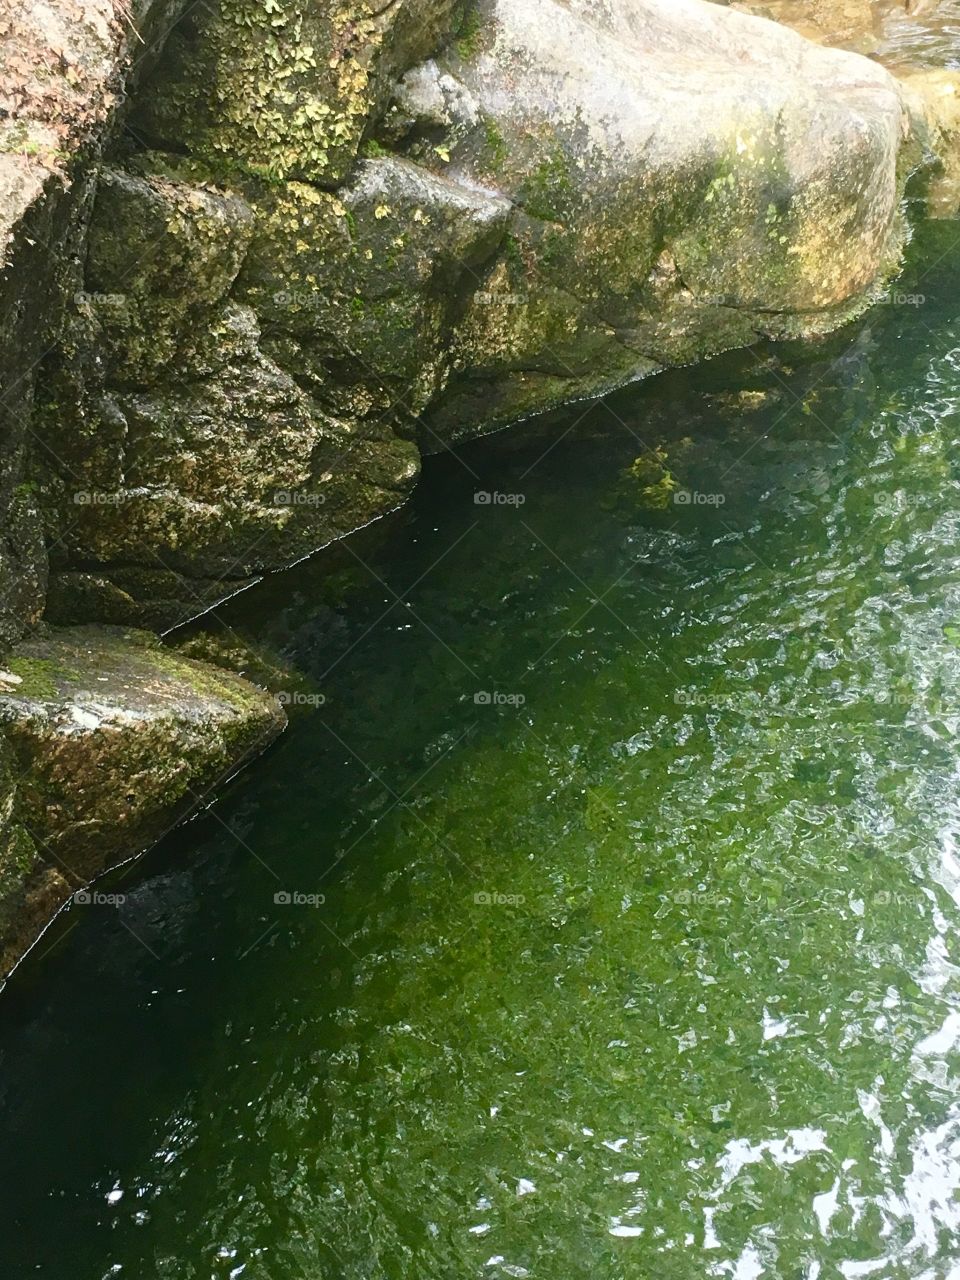 Emerald pool